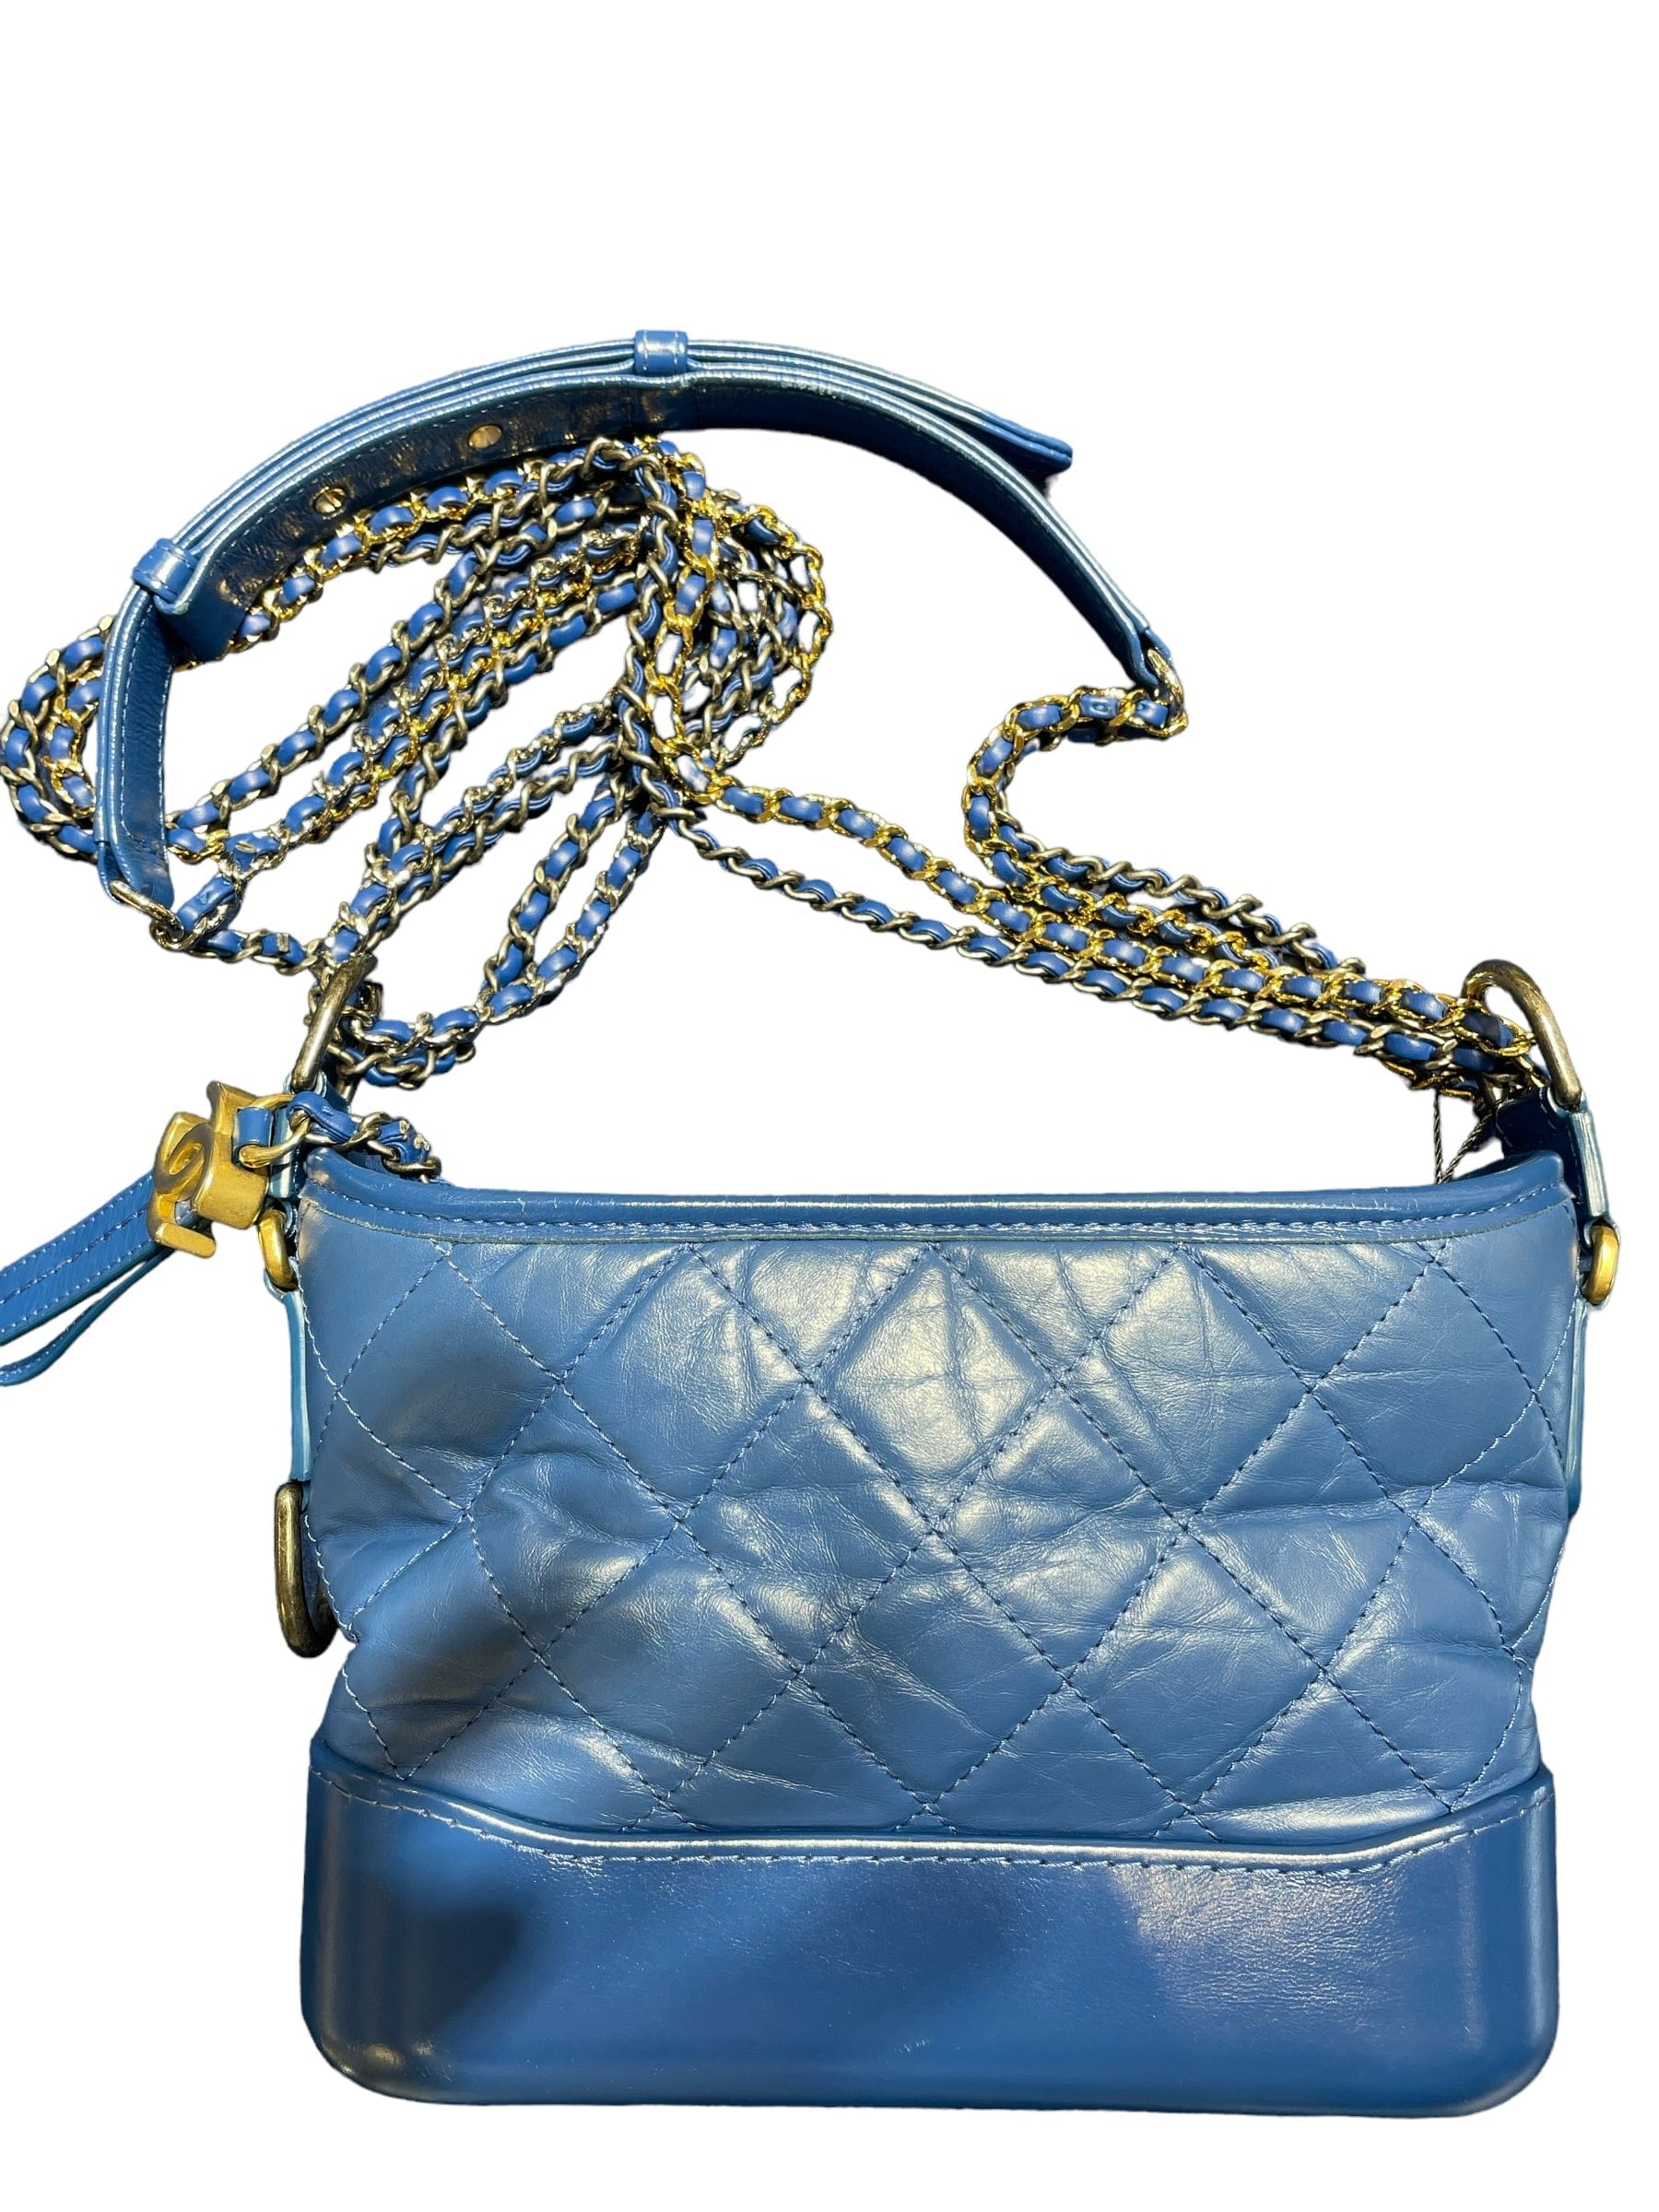 Chanel Gabrielle Leather Bag